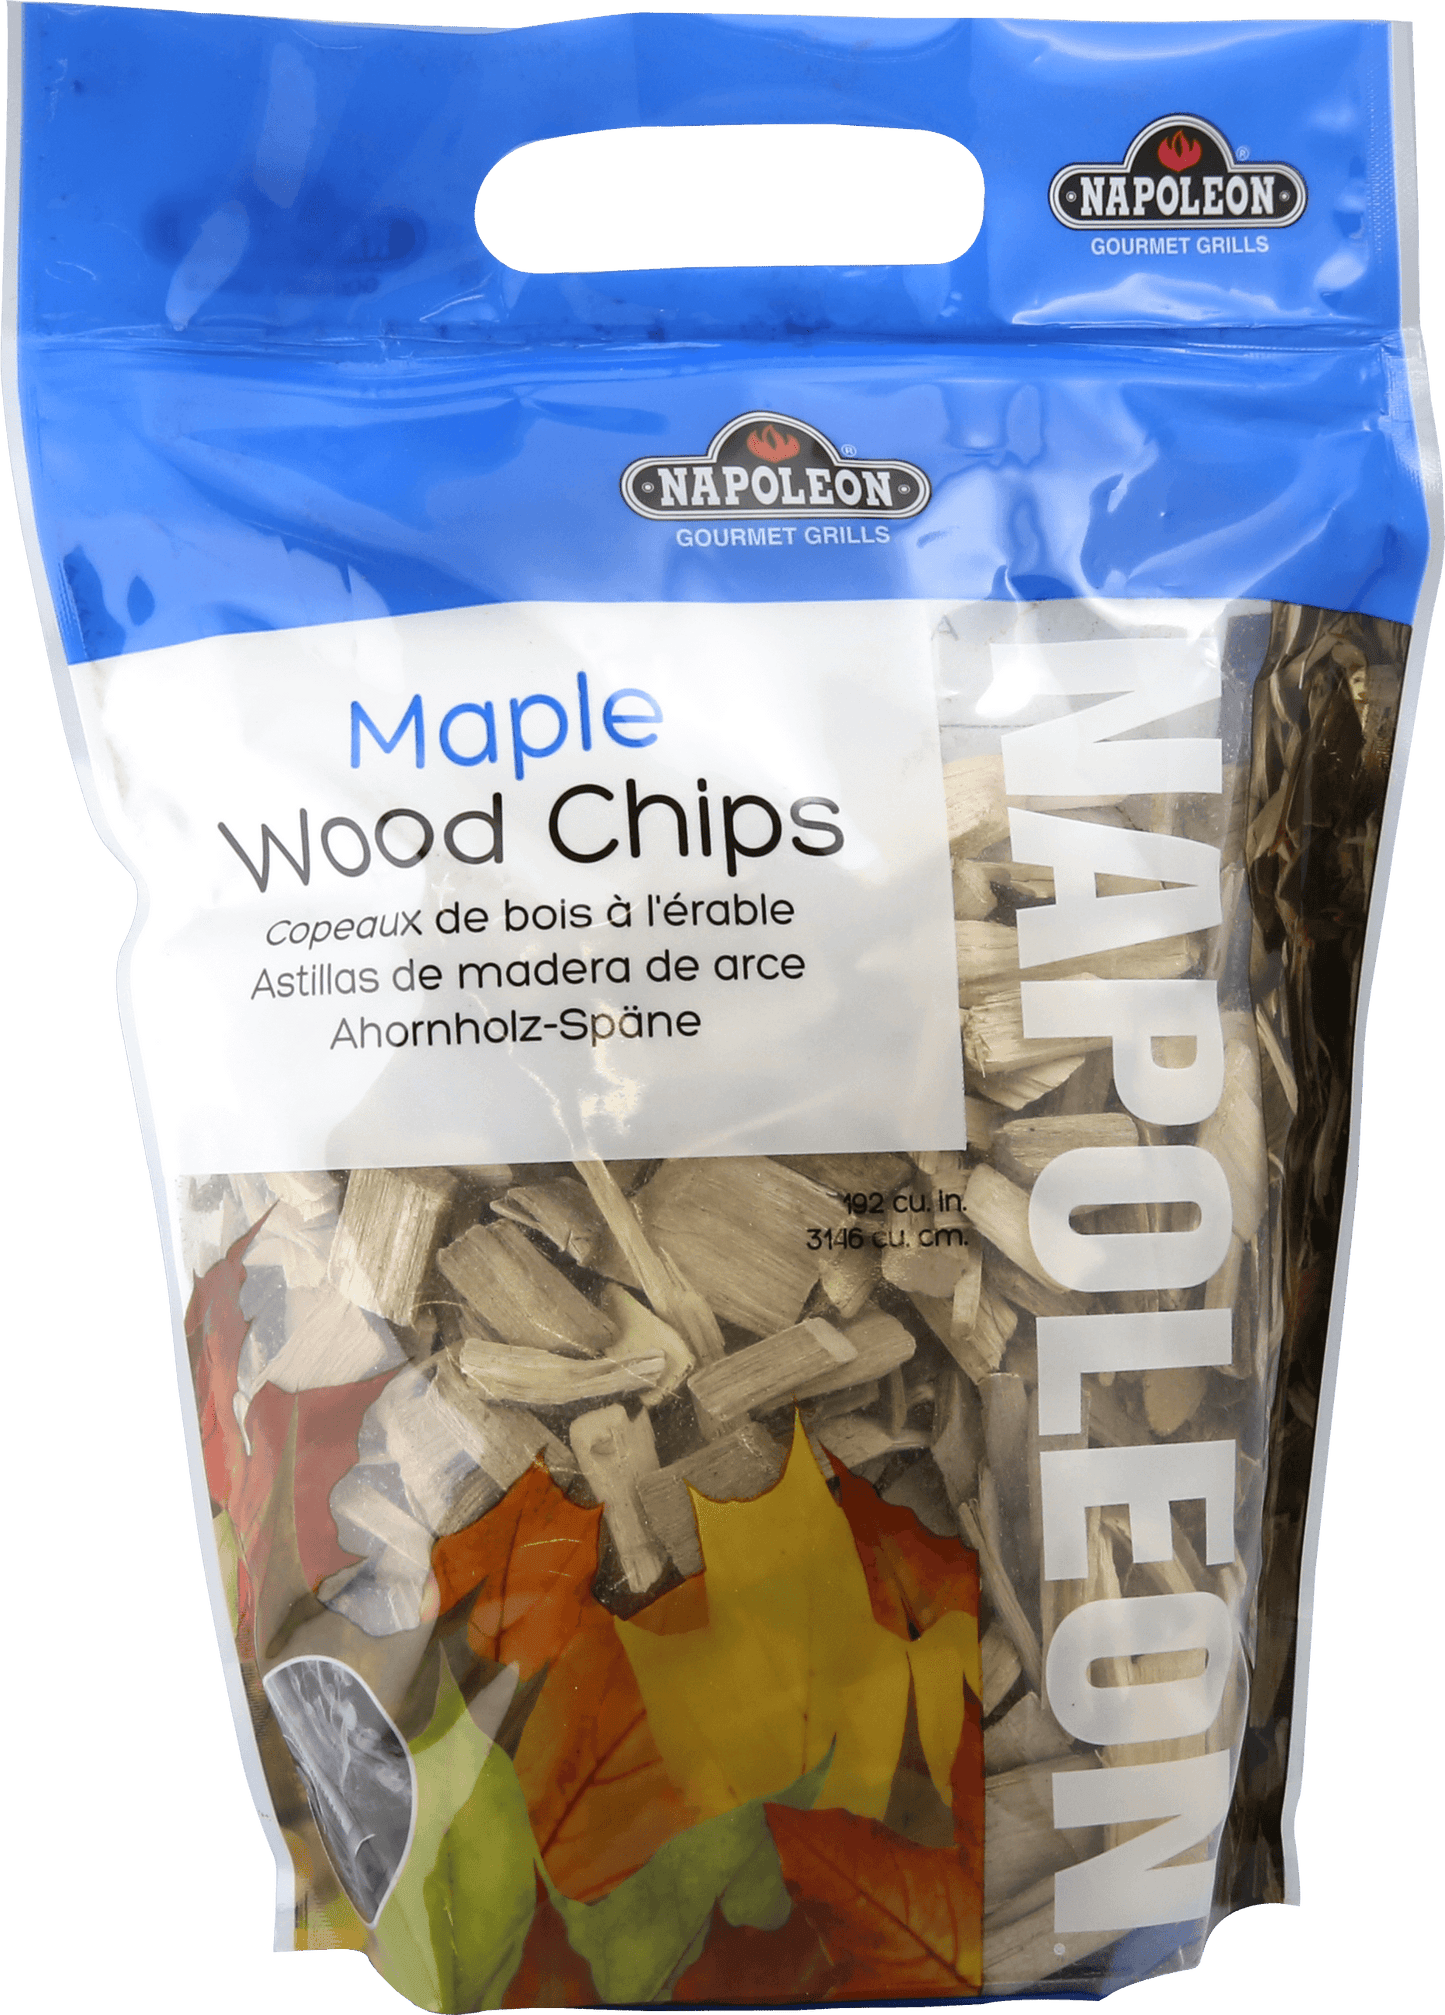 Napoleon 2lb. Maple Wood Chips